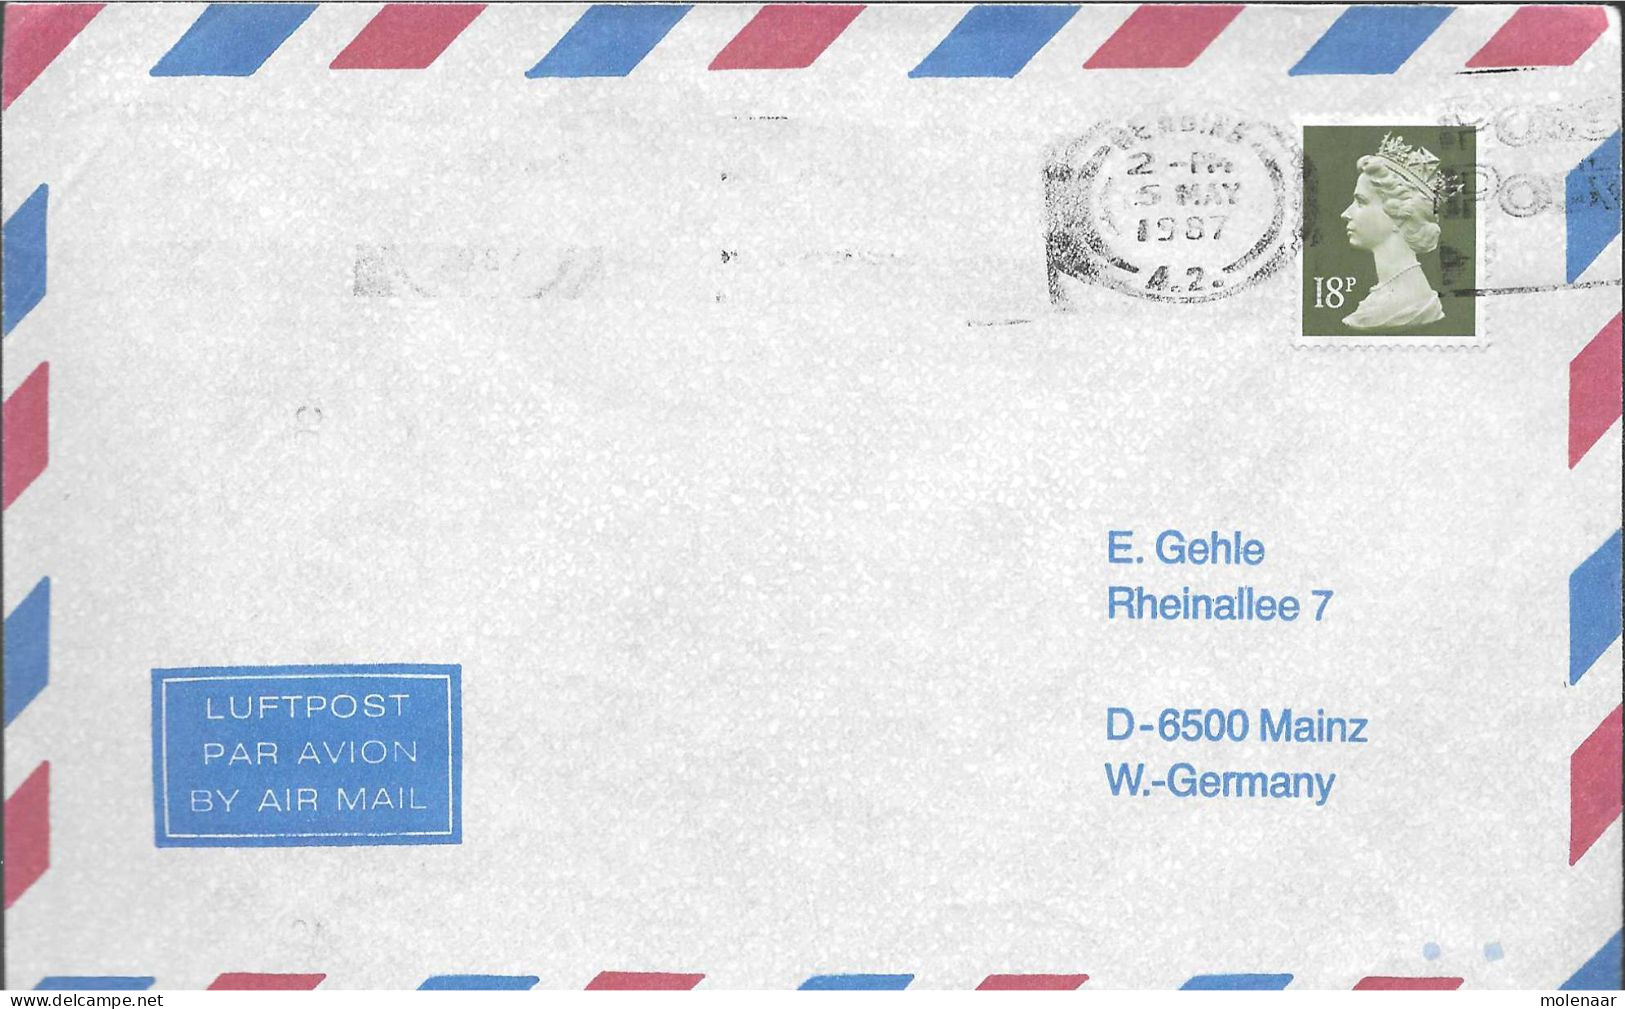 Postzegels > Europa > Groot-Brittannië > 1952-2022 Elizabeth II > Brief Met 1 Postzegel (17540) - Lettres & Documents